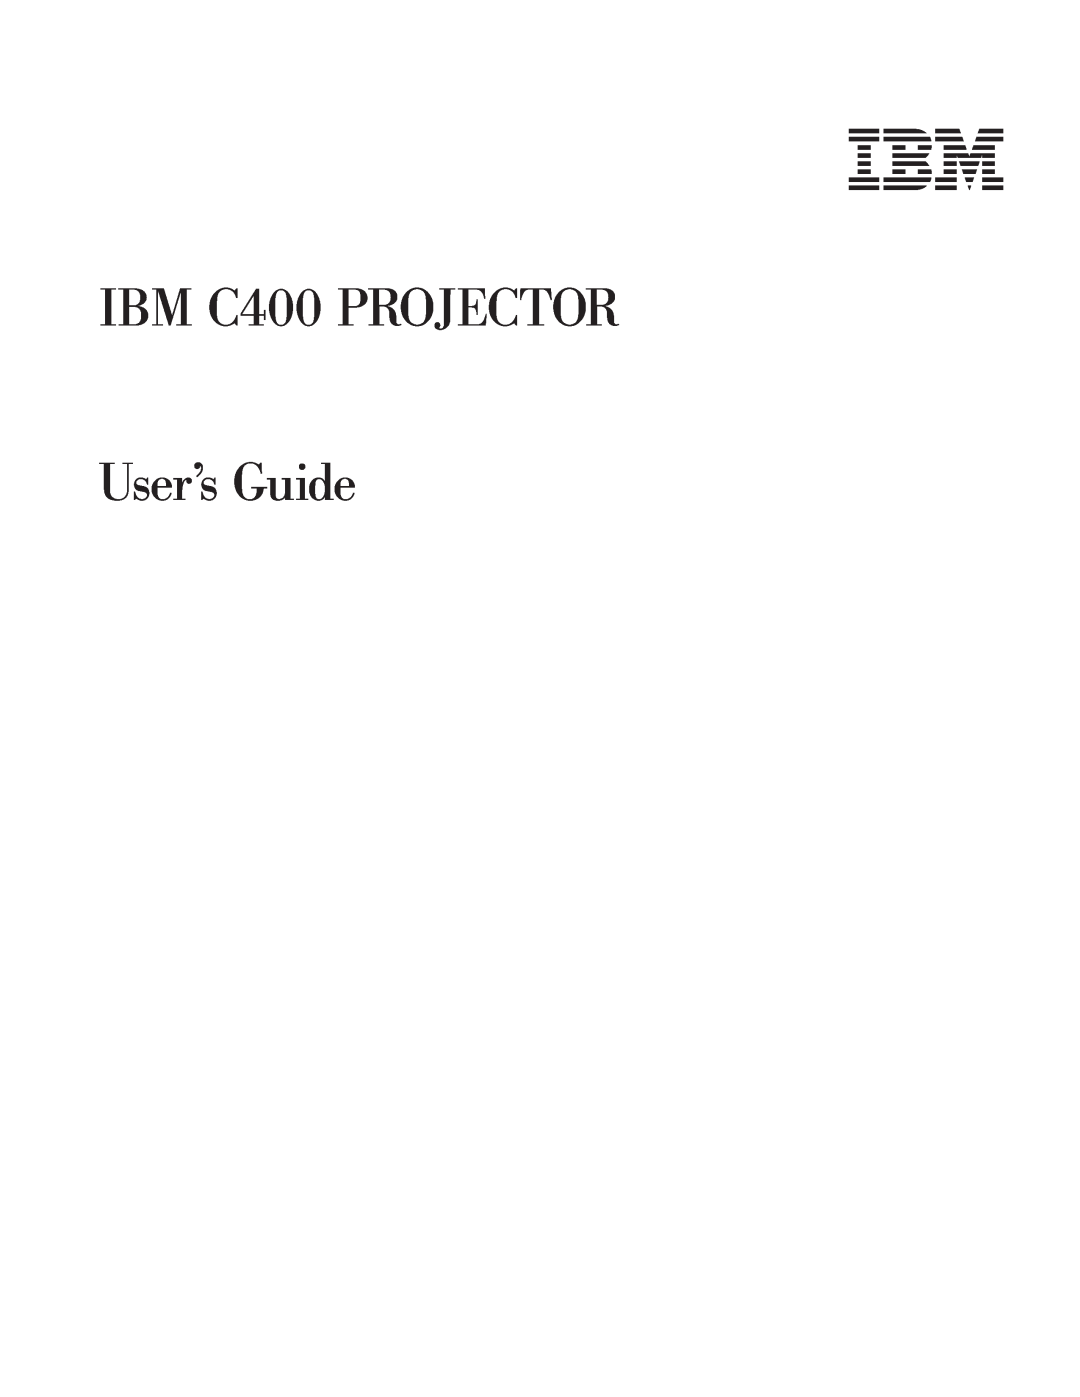 IBM PROJECTOR C400 manual IBM C400 PROJECTOR User’s Guide 